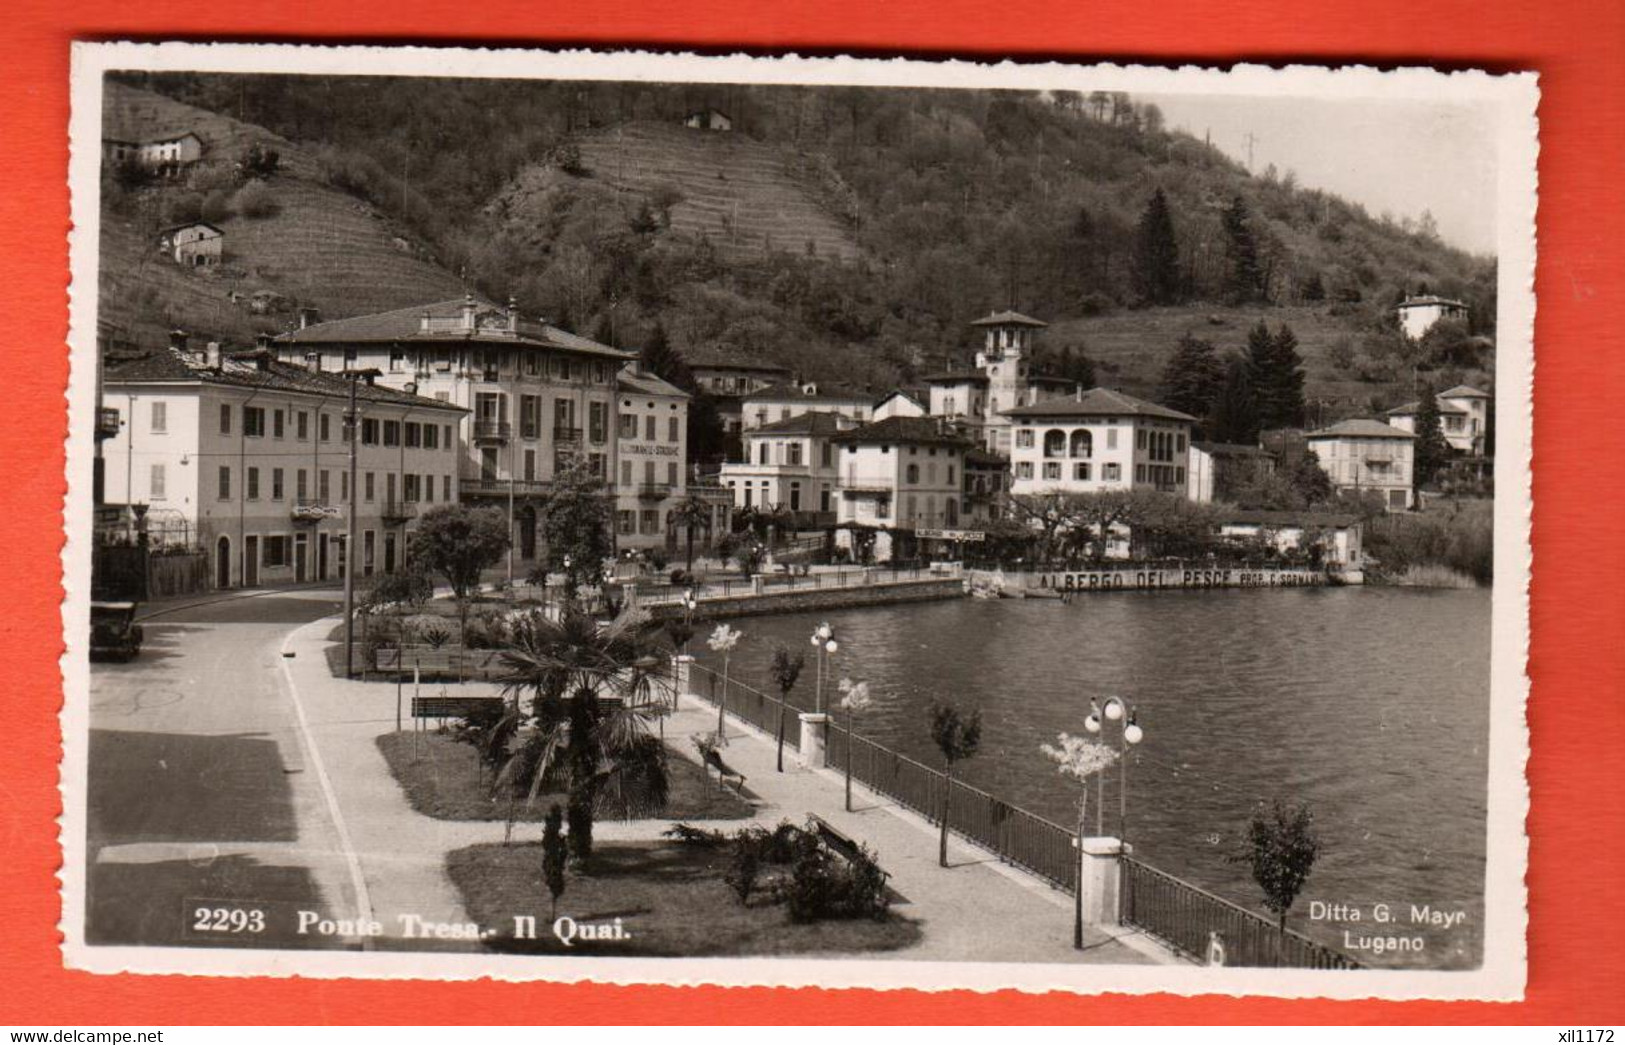 ZTW-27  Ponte Tresa Il Quai. G. Mayr 2293  Visa ACF 1939  NC - Ponte Tresa